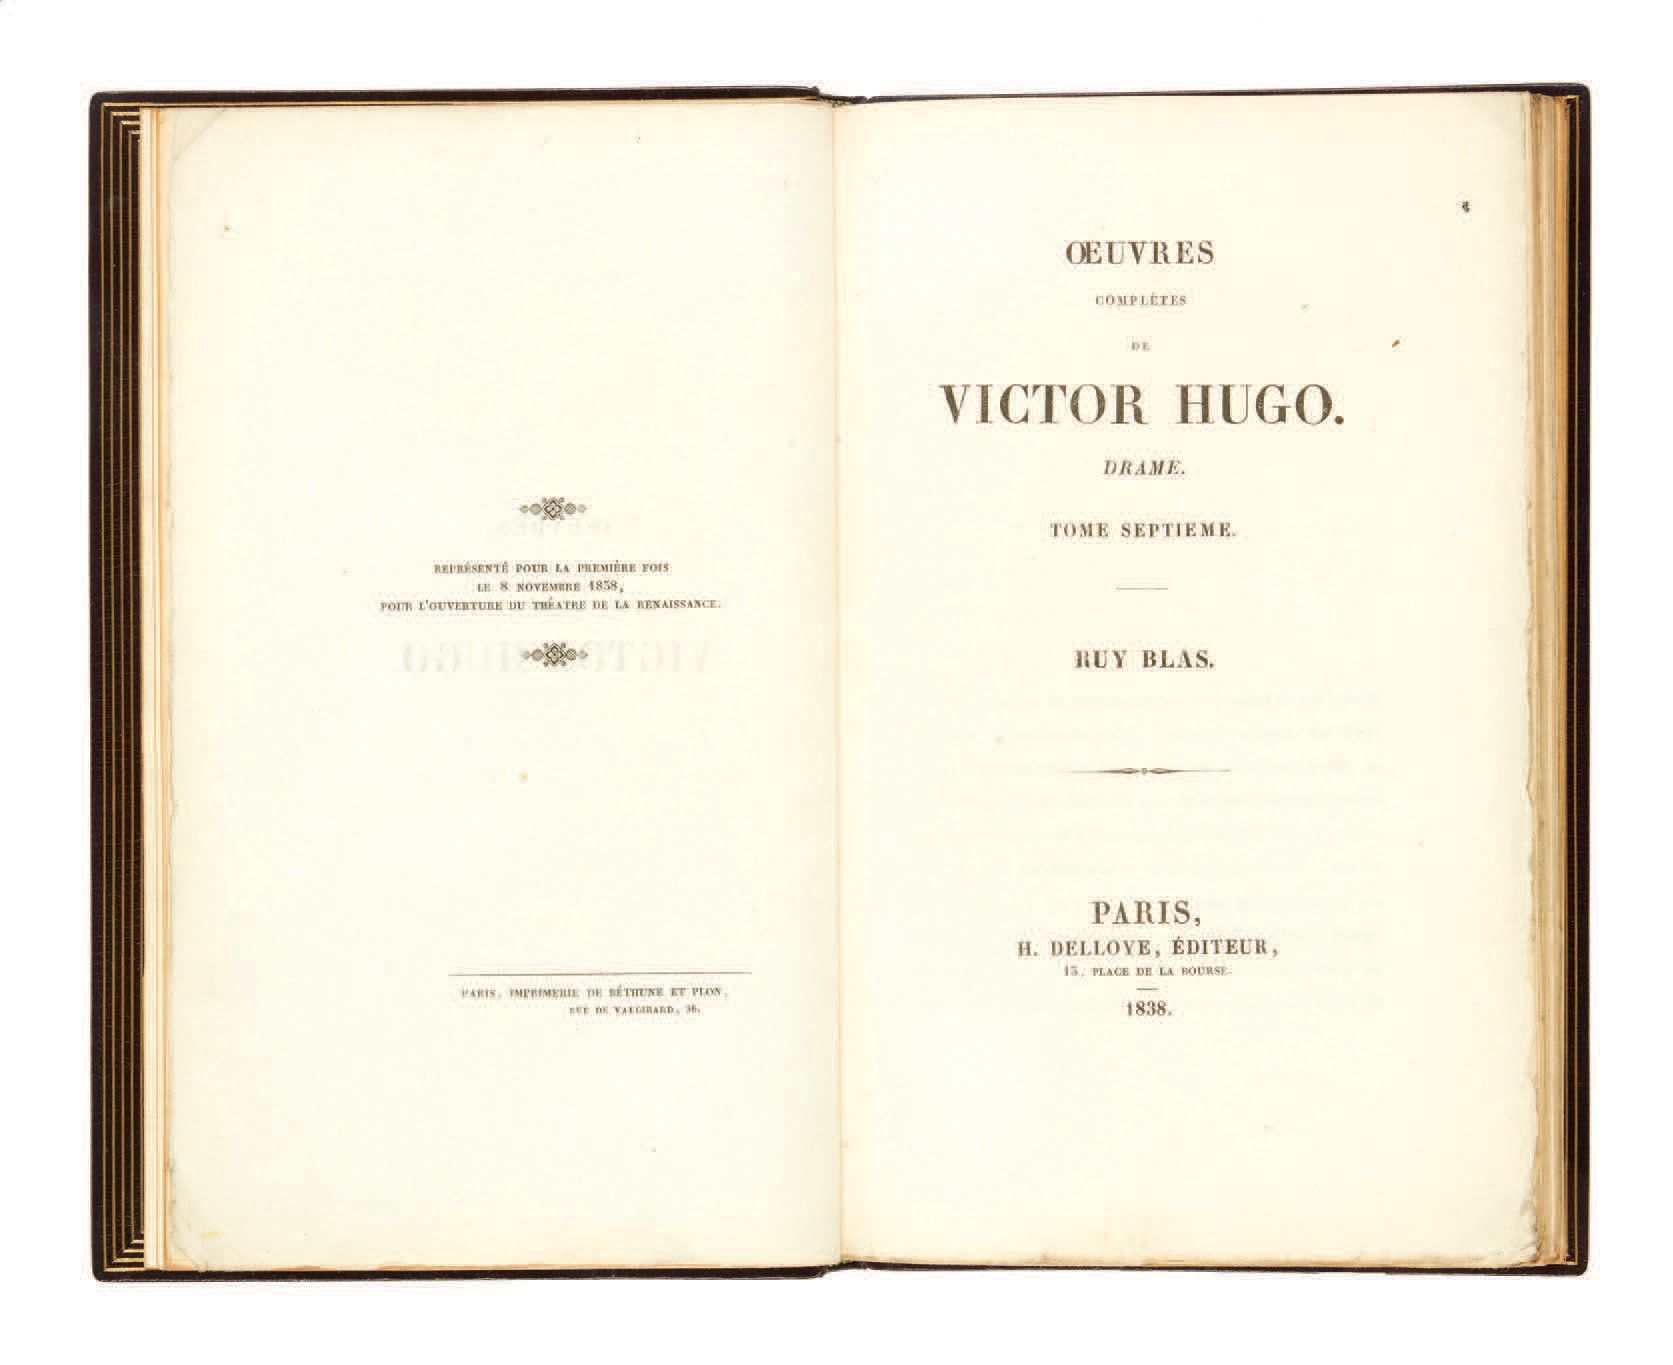 VICTOR HUGO. Ruy Blas. Paris, H. Delloye, 1838.
In-8, auberginefarbenes langkörn&hellip;